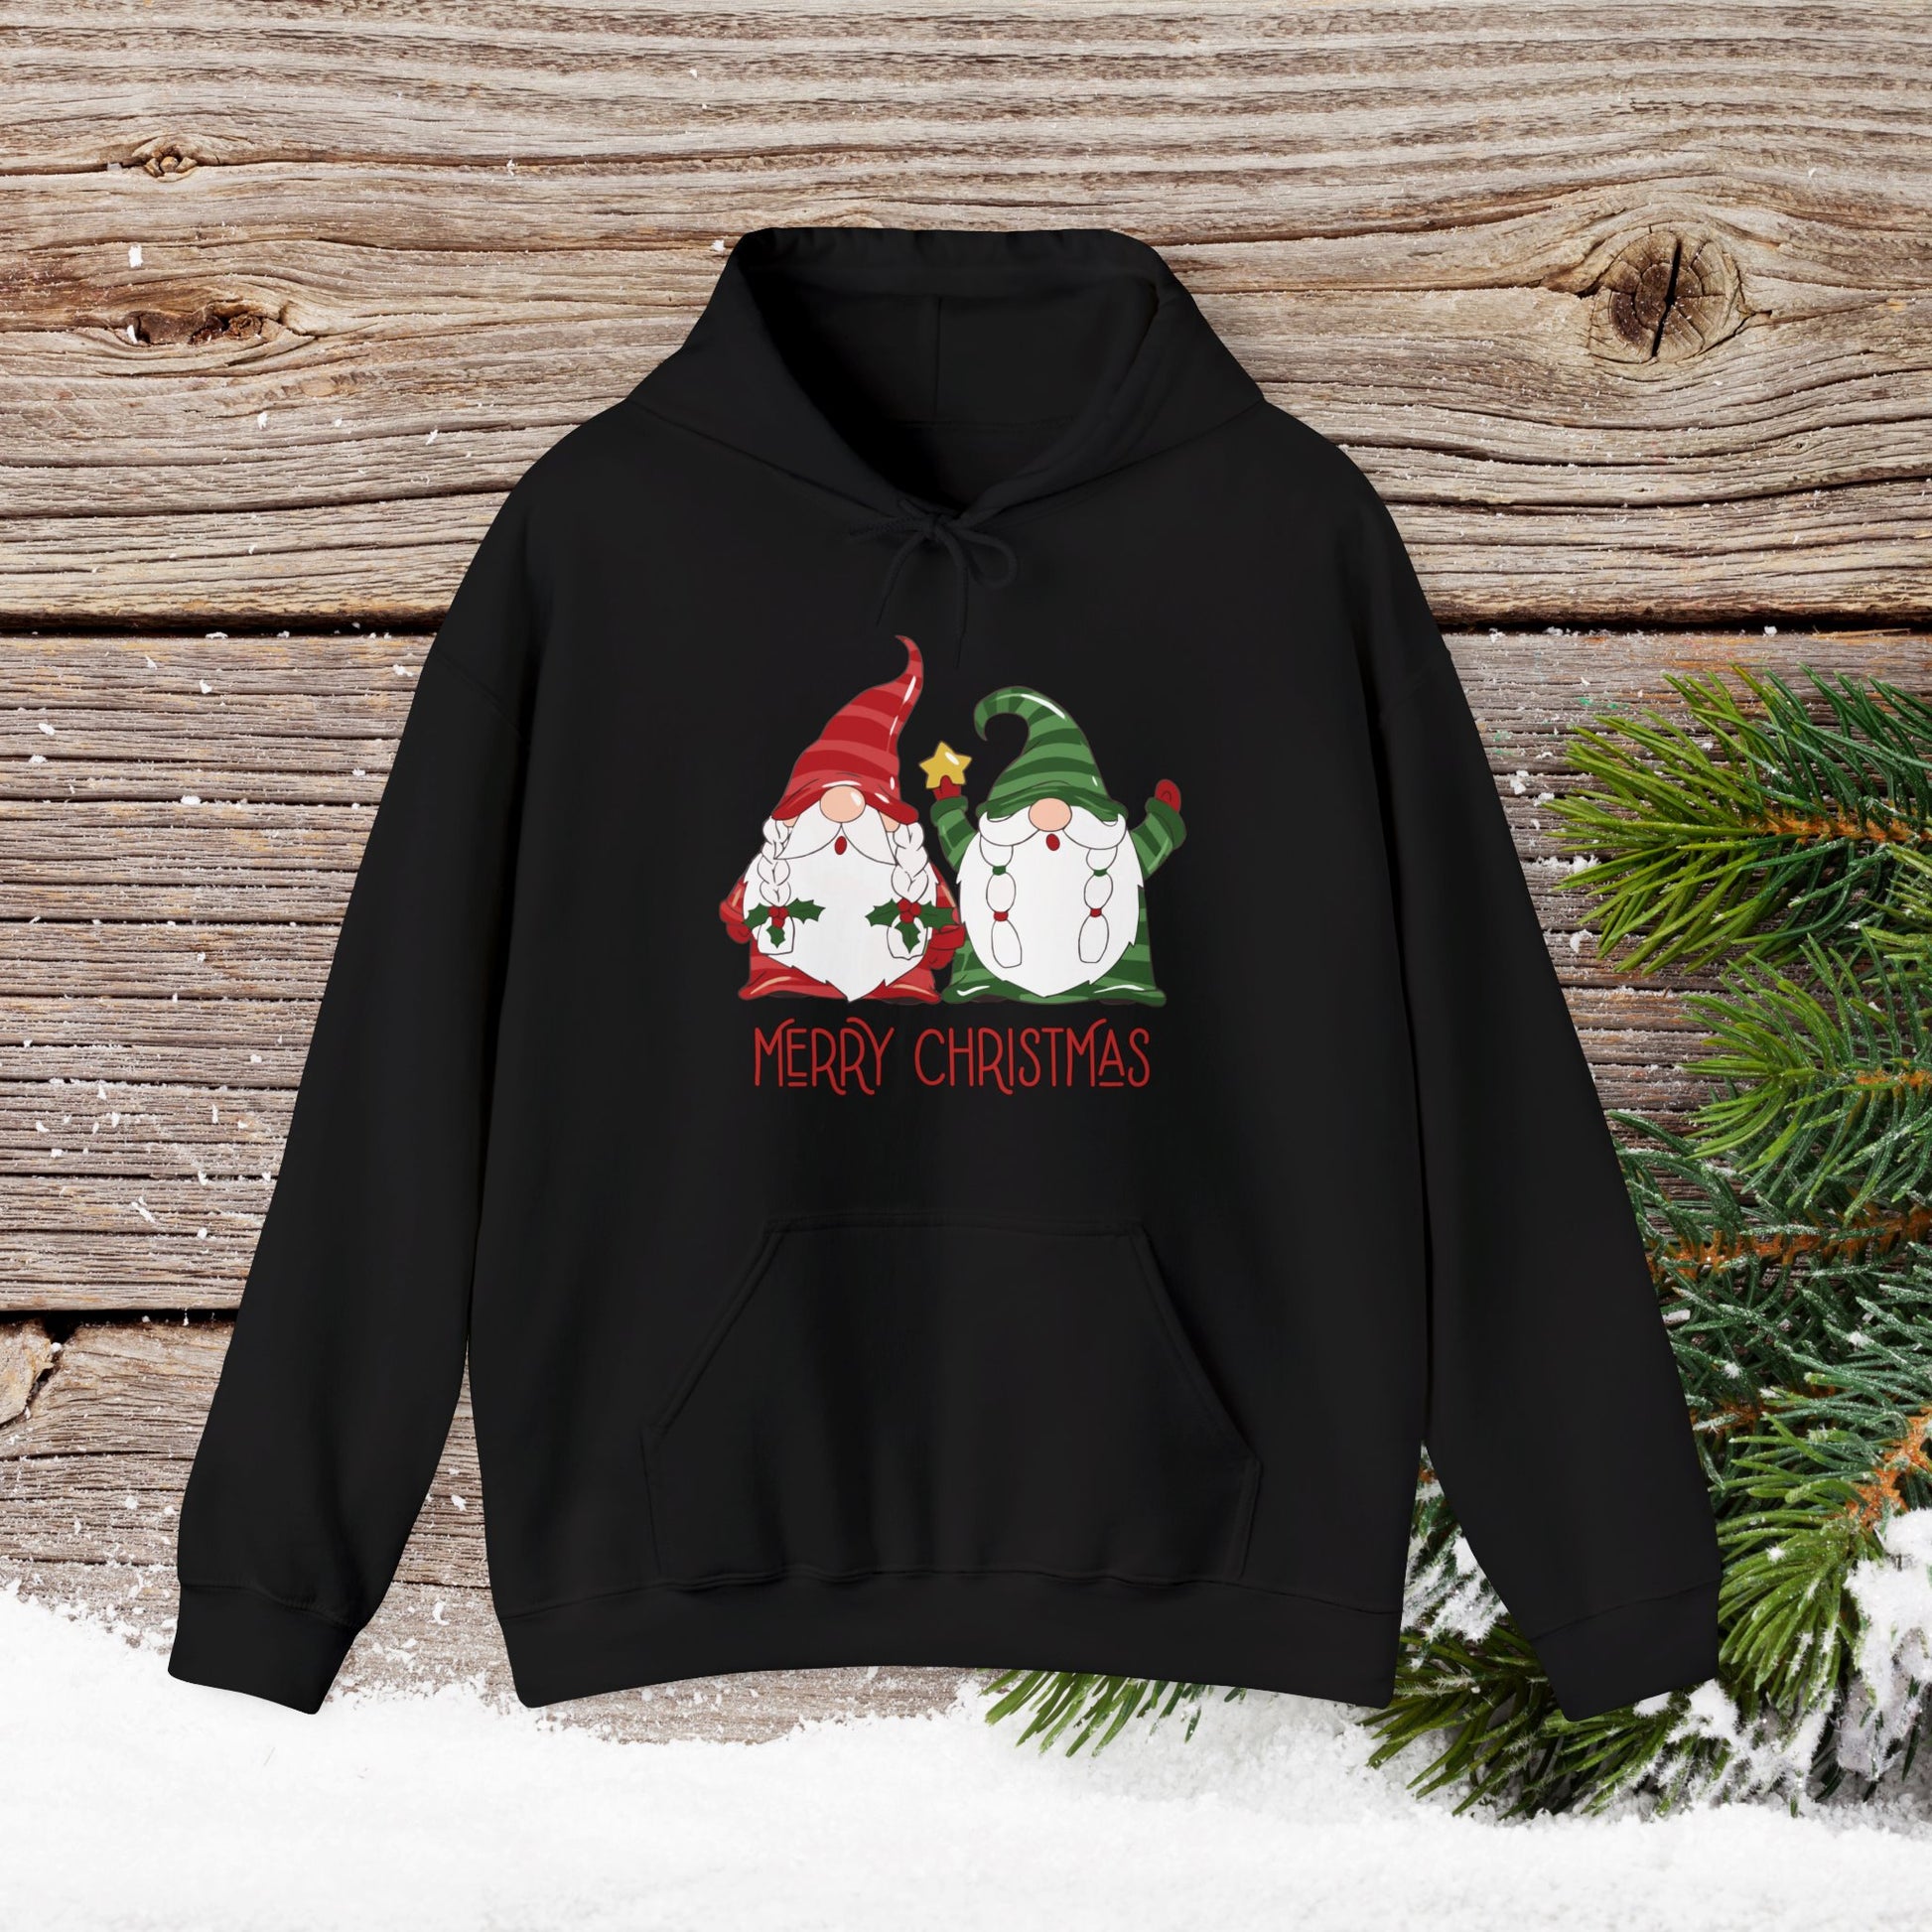 Christmas Hoodie - Gnome Merry Christmas - Cute Christmas Shirts - Youth and Adult Christmas Hooded Sweatshirt Hooded Sweatshirt Graphic Avenue Black Adult Small 